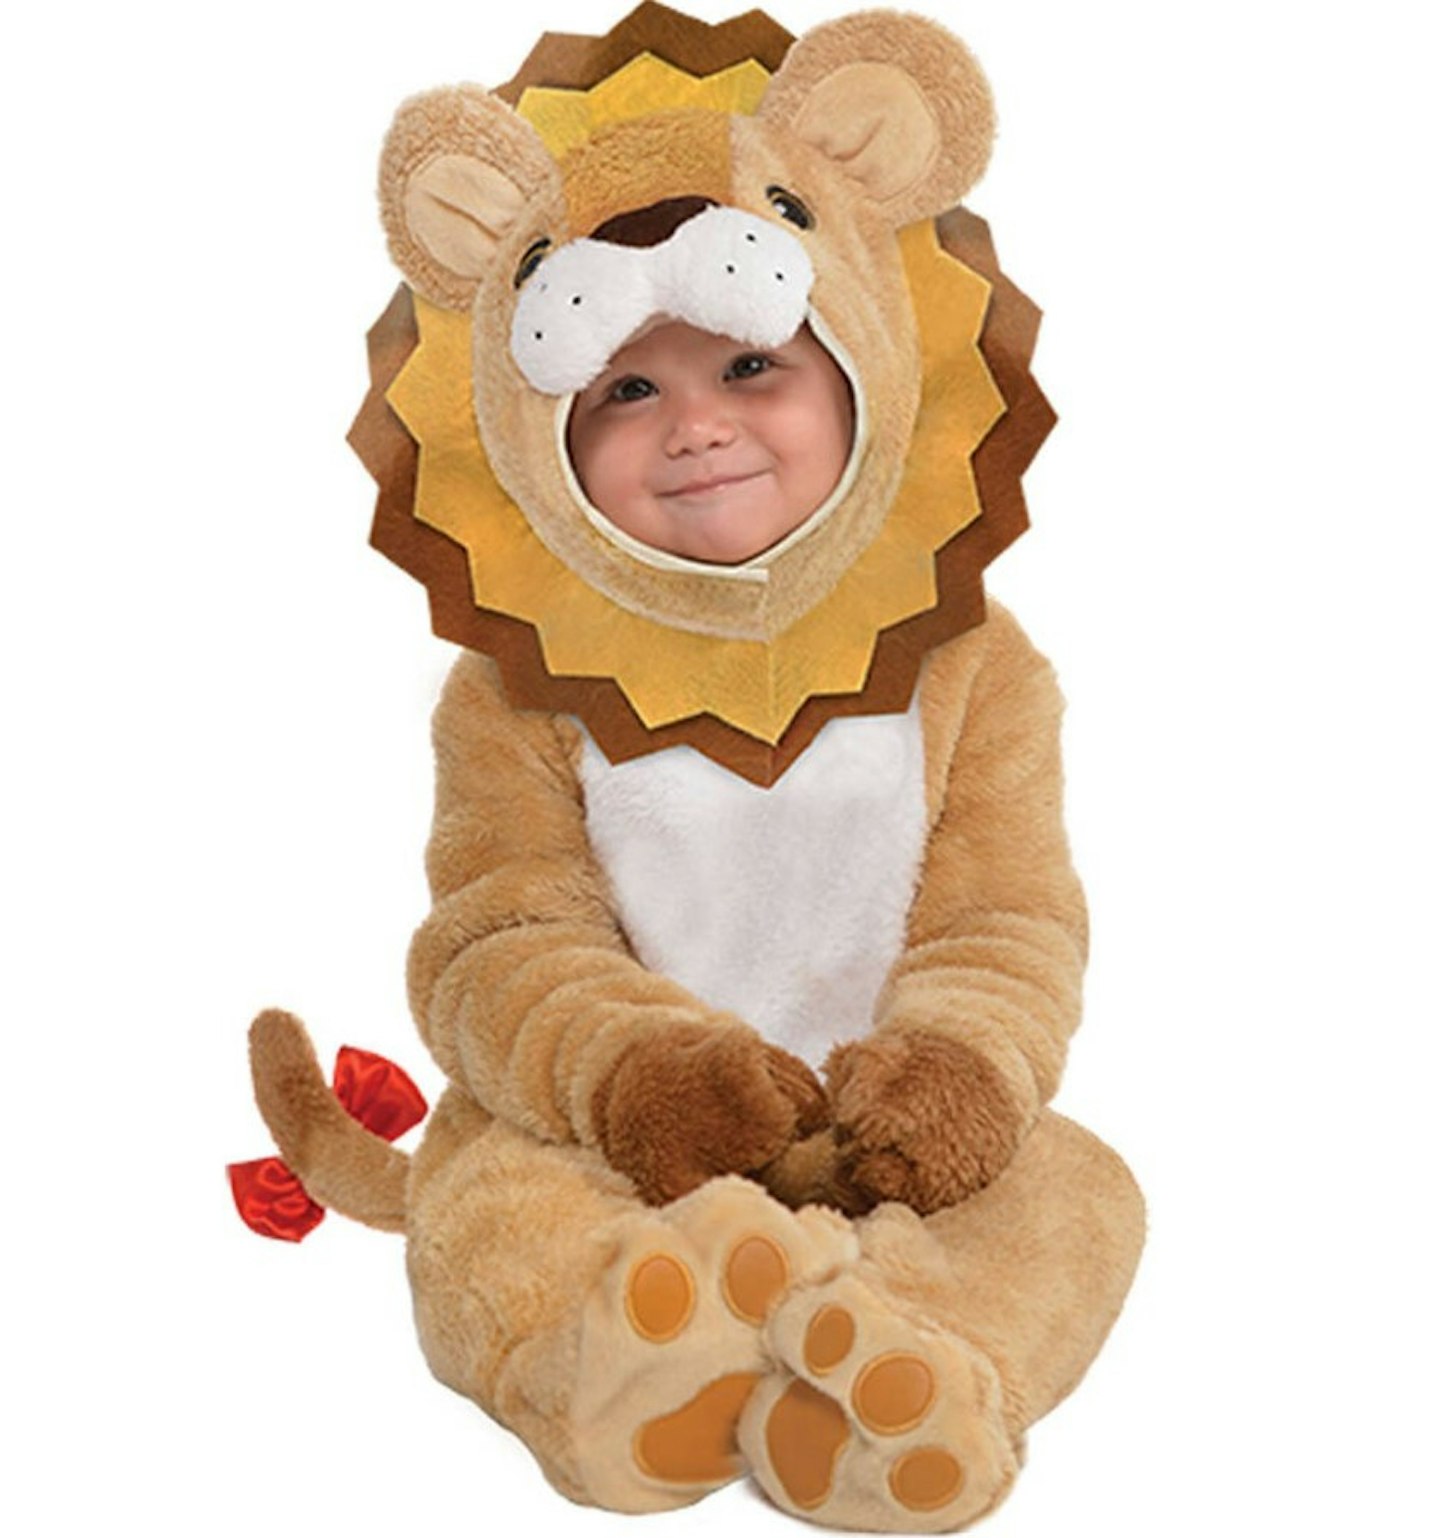 Kids Halloween Costumes: Baby's Lion Dress Up Costume